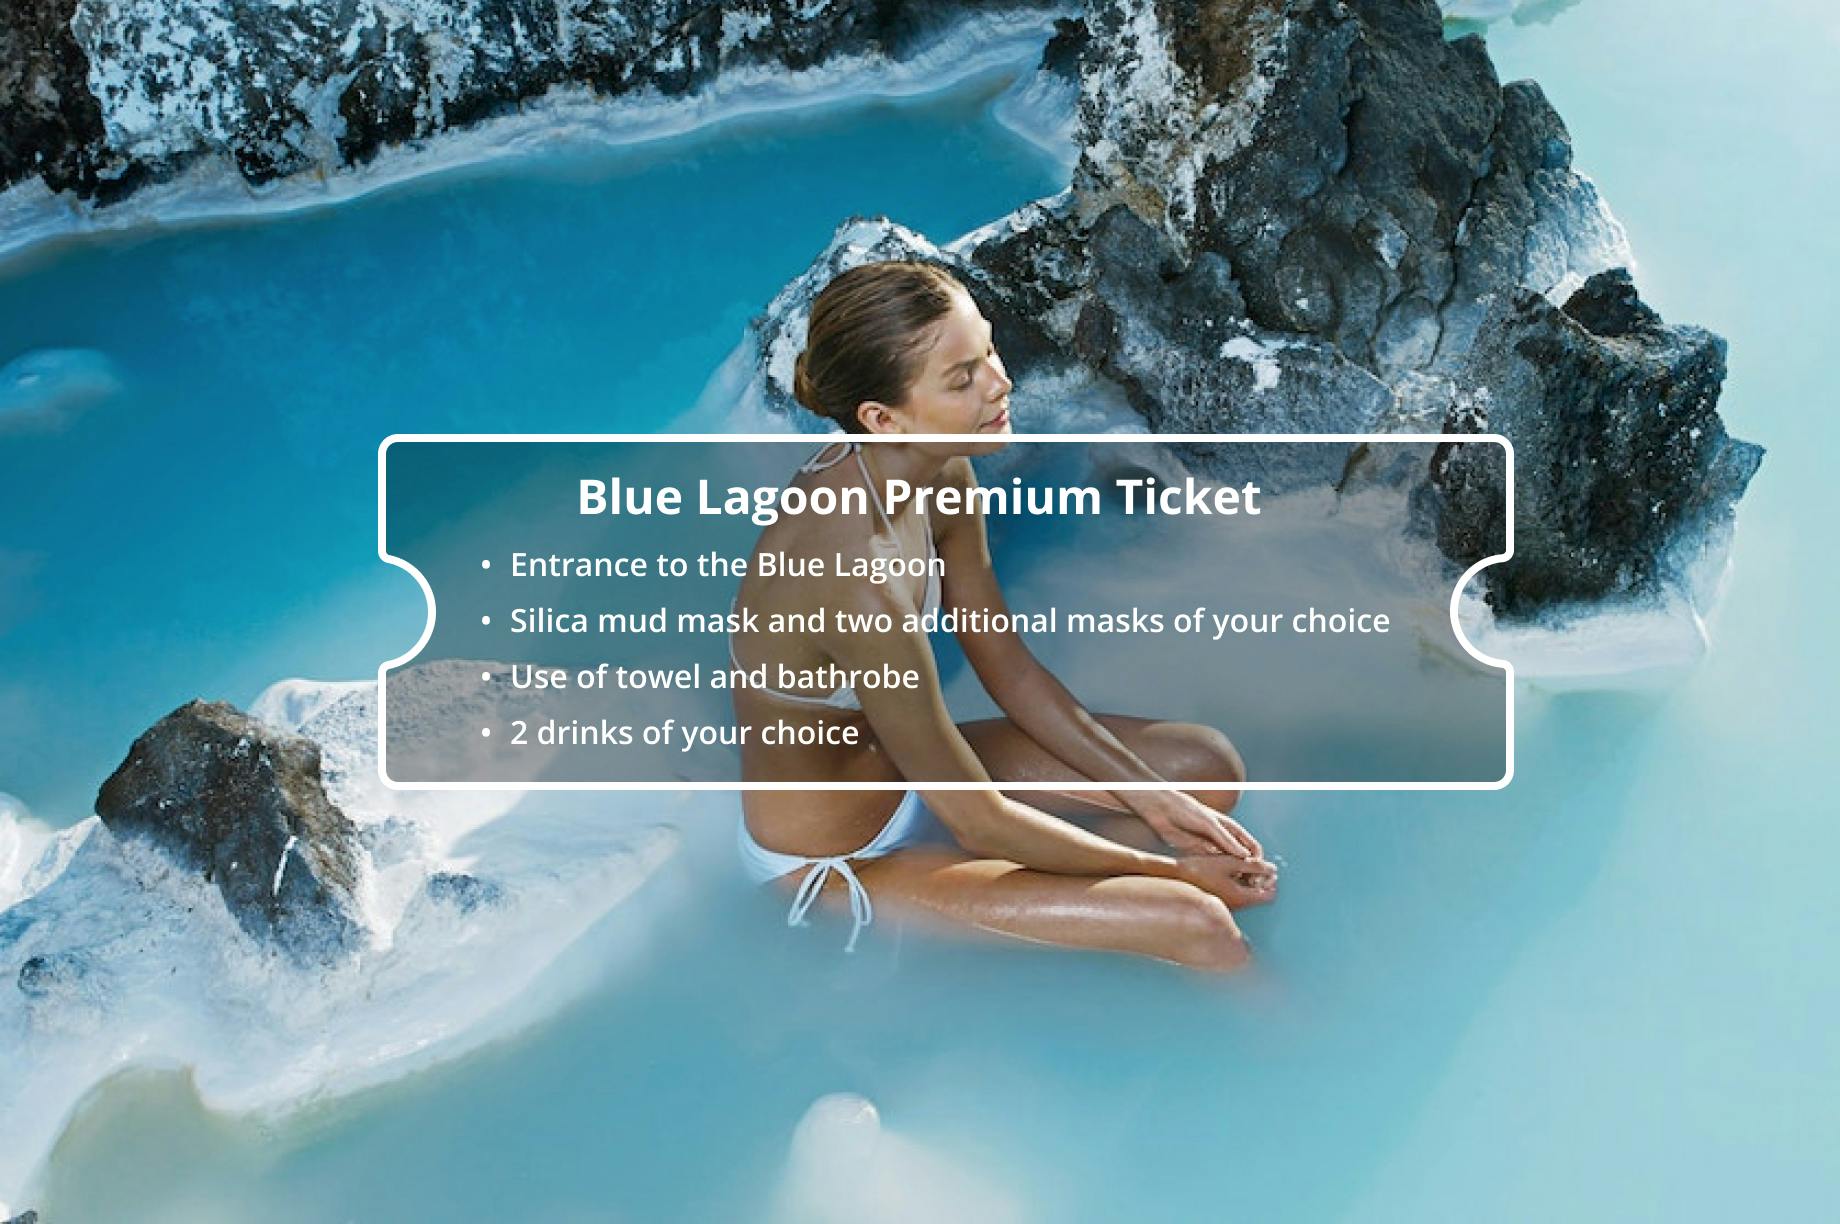 Enjoy a Premium Entrance to the Blue Lagoon